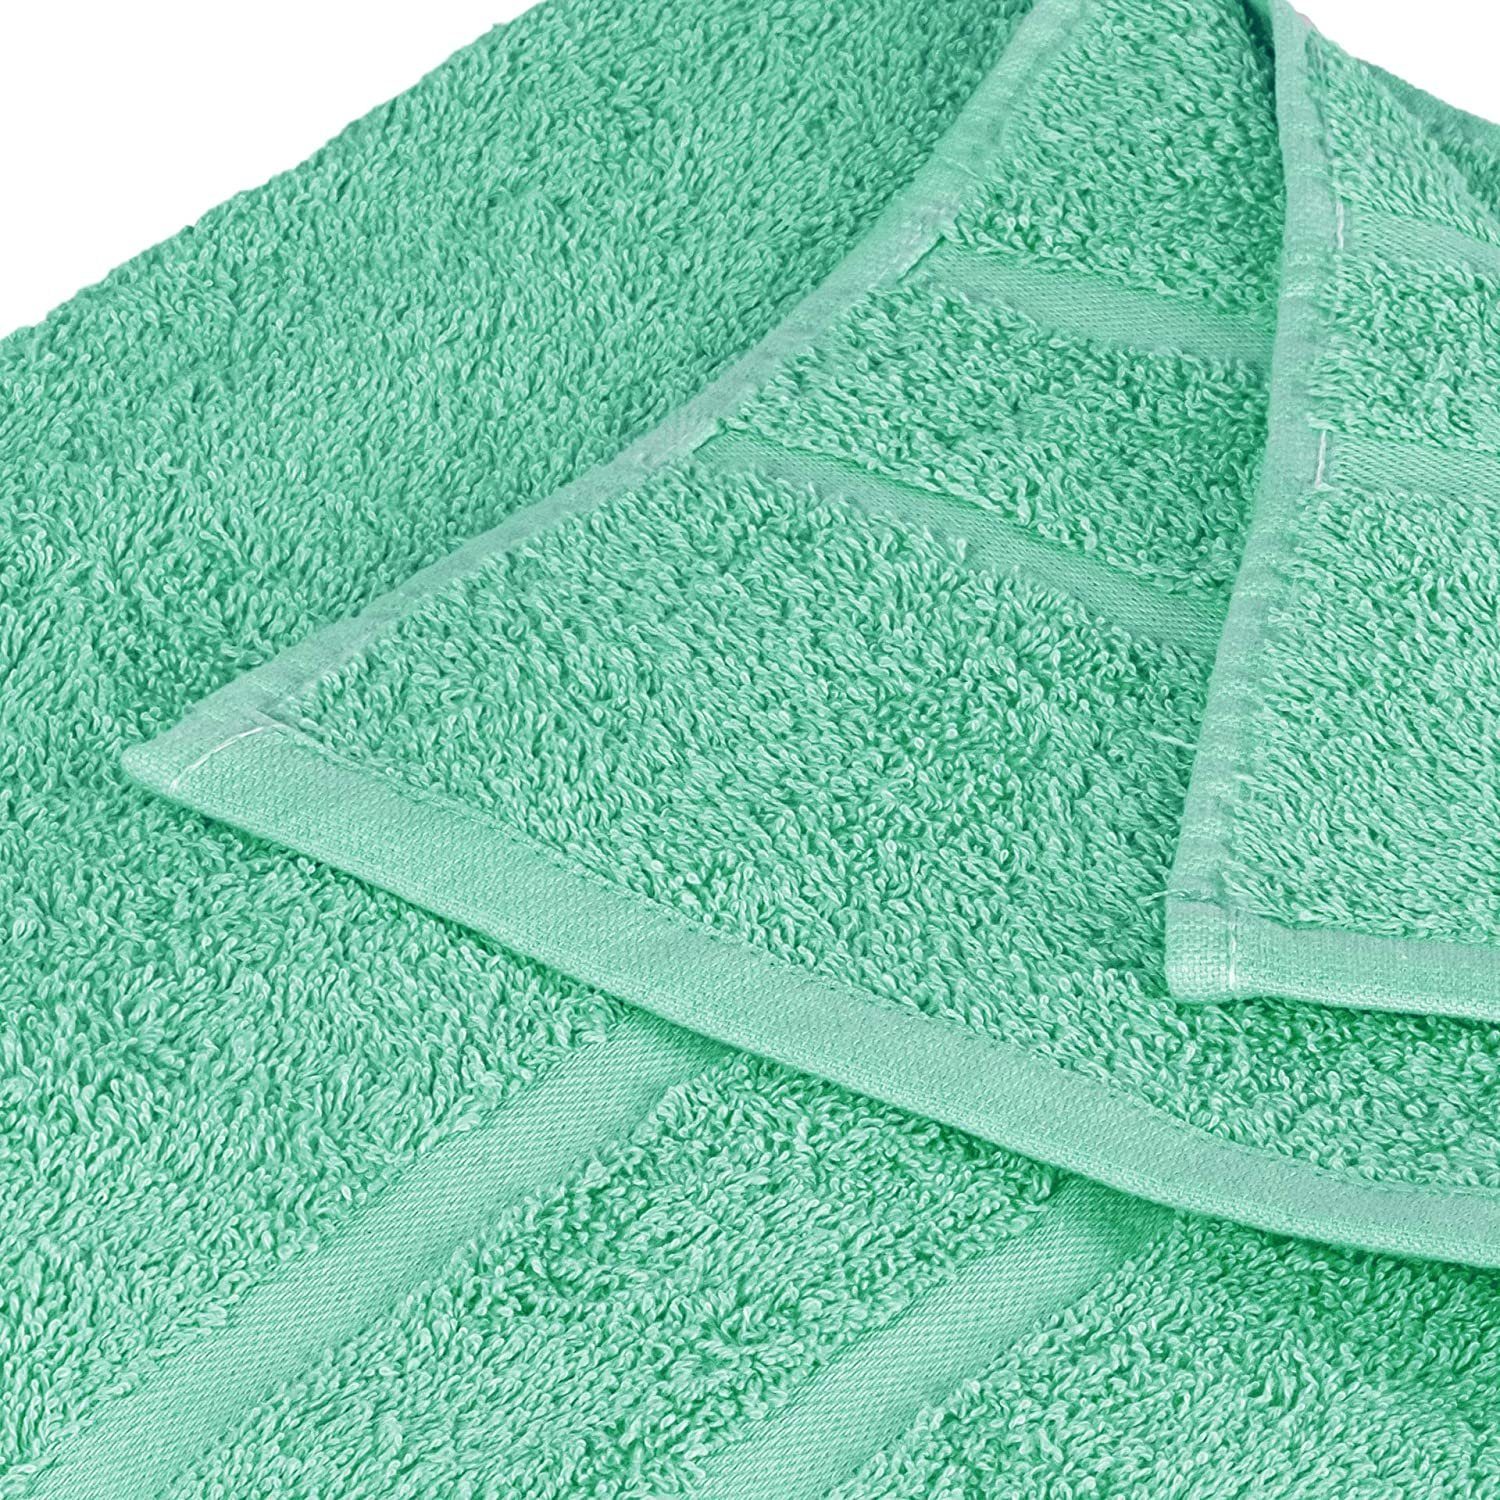 StickandShine Handtuch Handtücher Badetücher Baumwolle 100% Smaragdgrün in Saunatücher Wahl GSM zur 500 Gästehandtücher Duschtücher